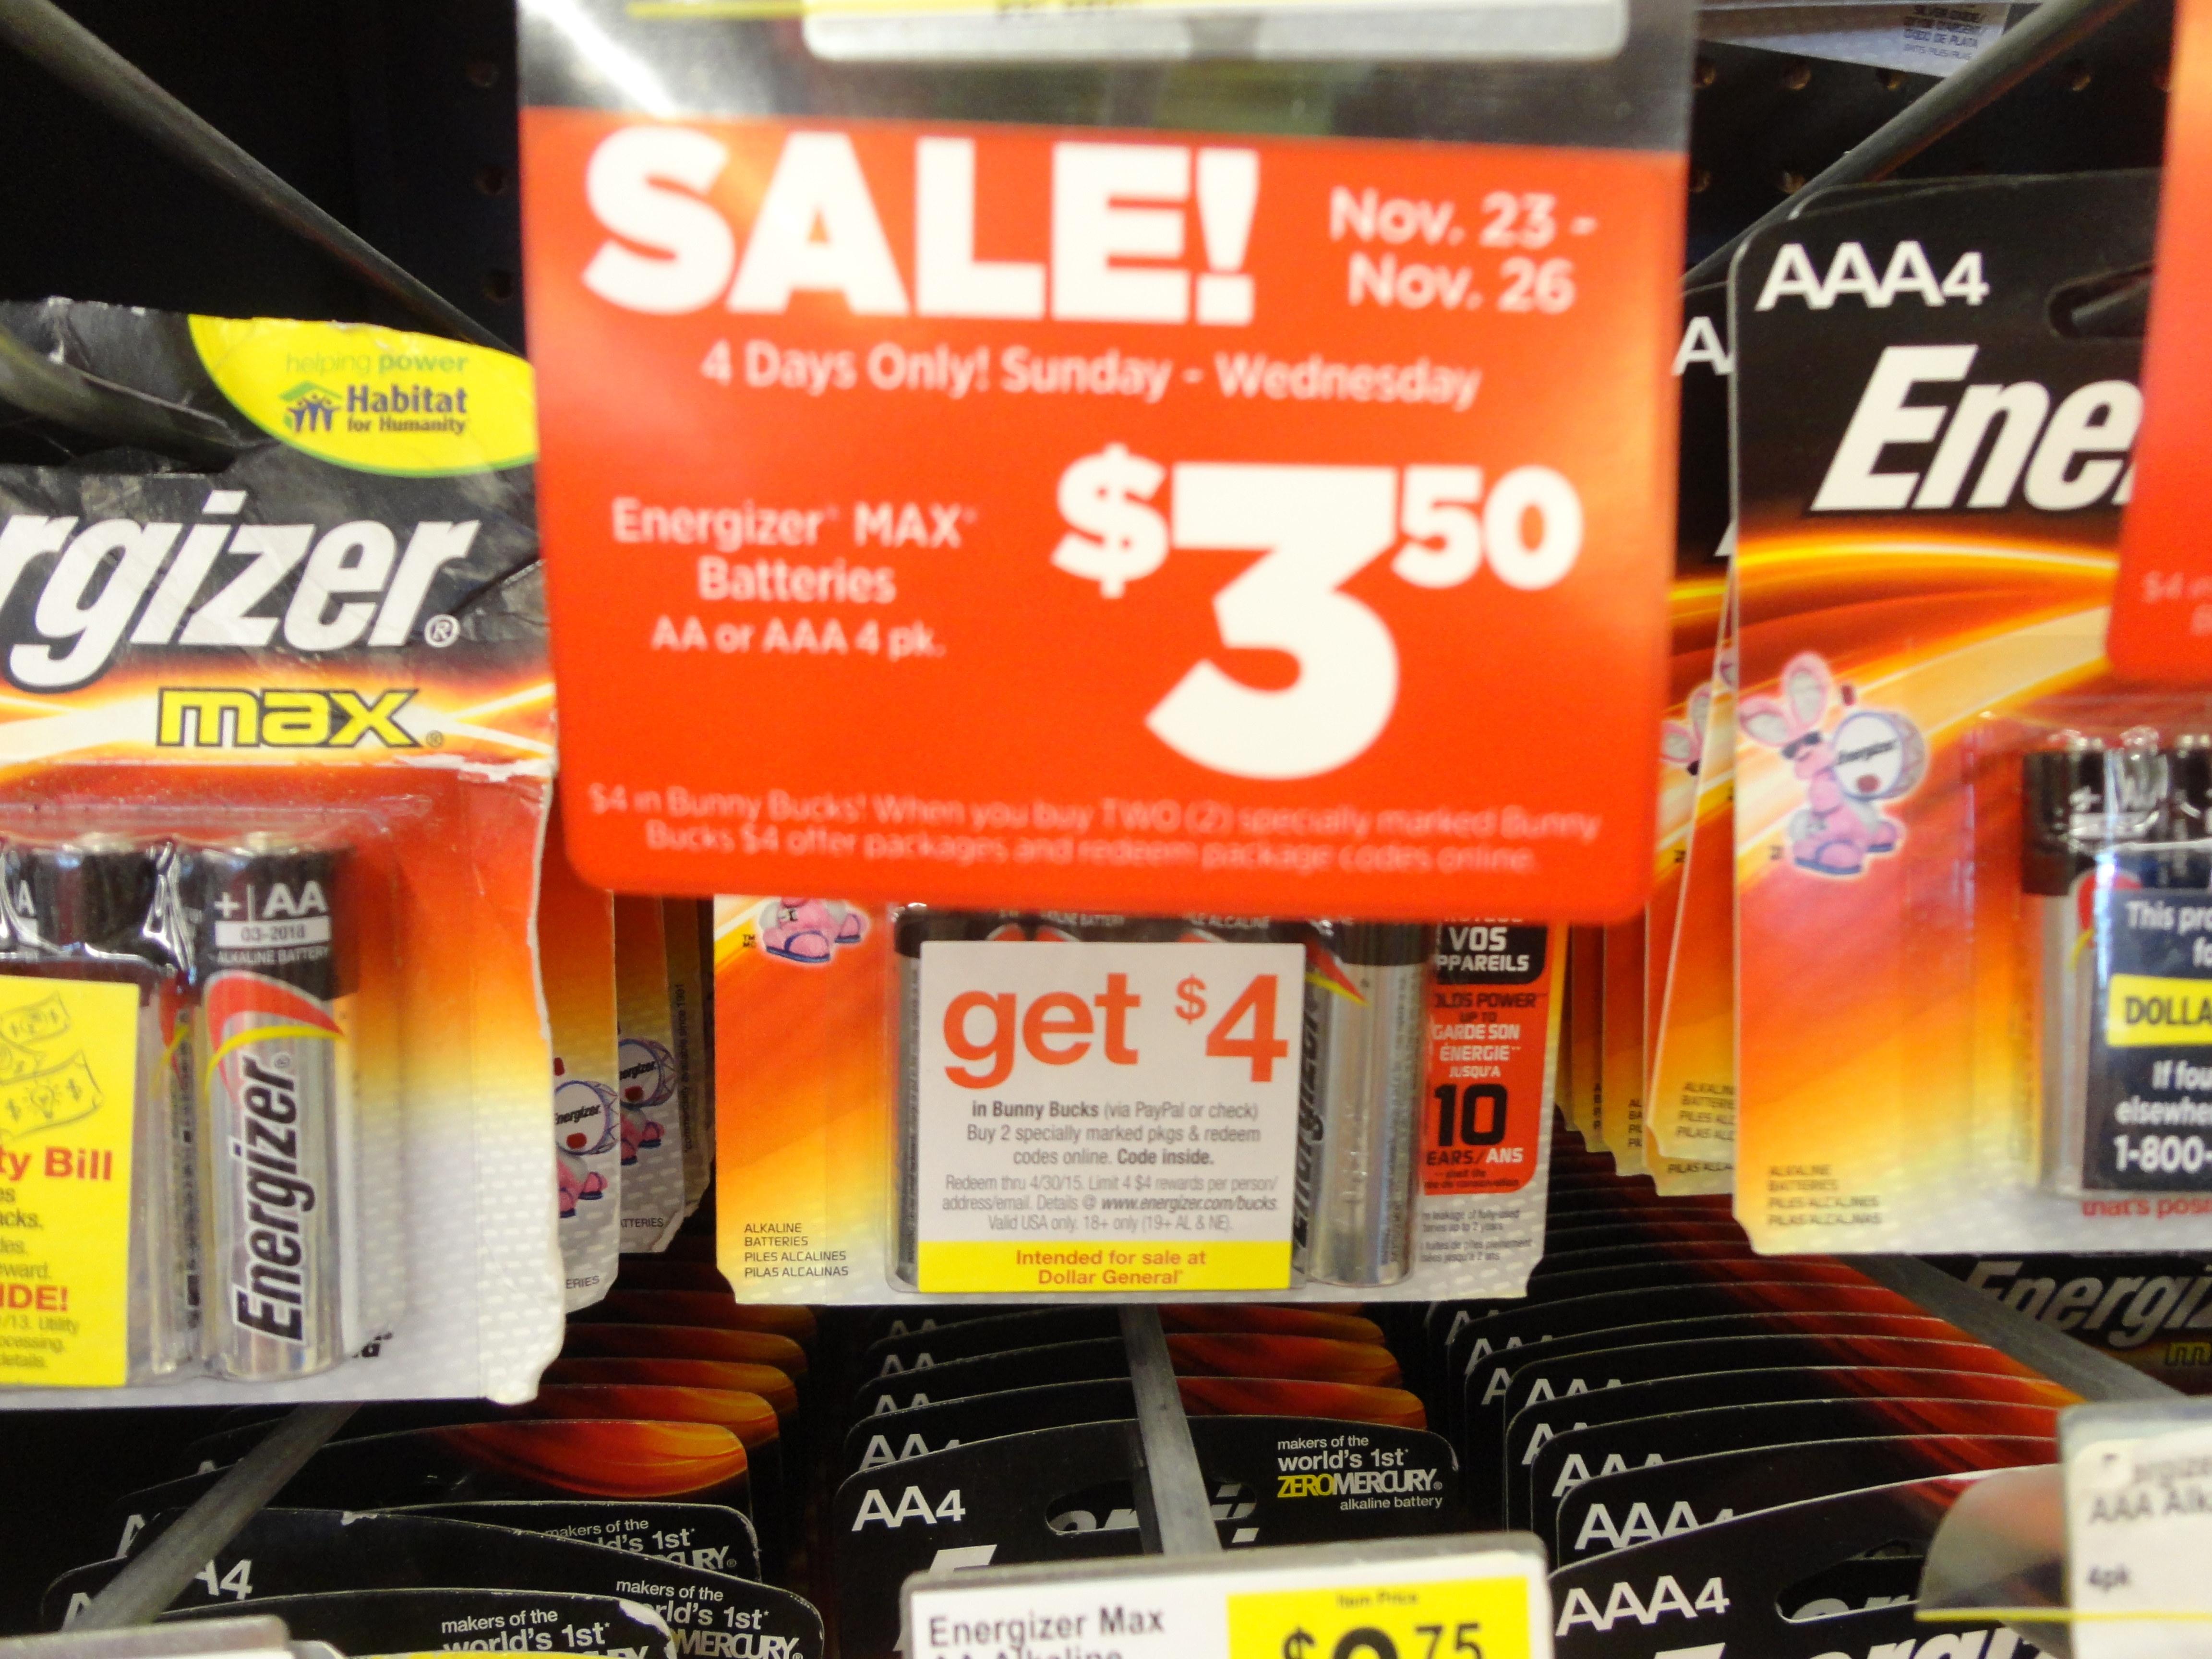 free-after-rebate-coupon-energizer-max-batteries-at-dollar-general